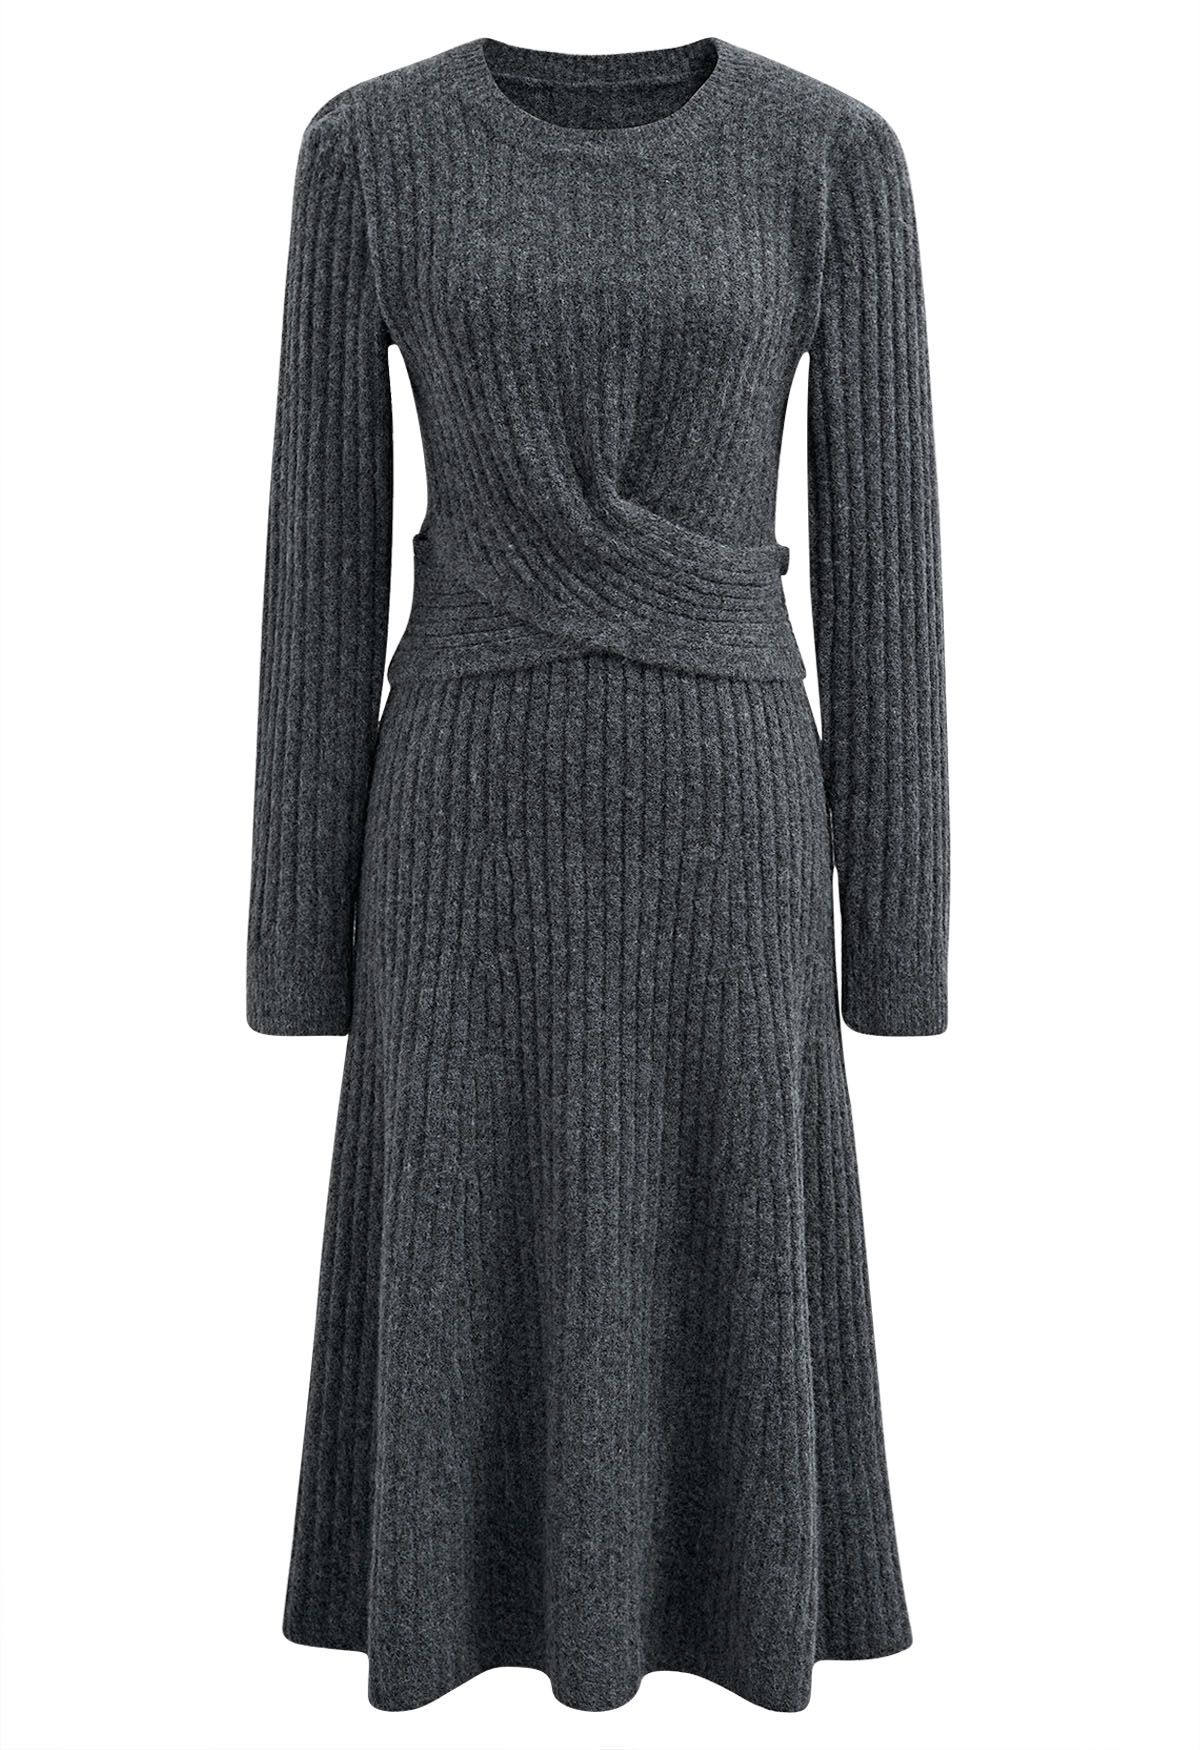 Cross Waist Wool-Blend Top and Skirt Set in Smoke